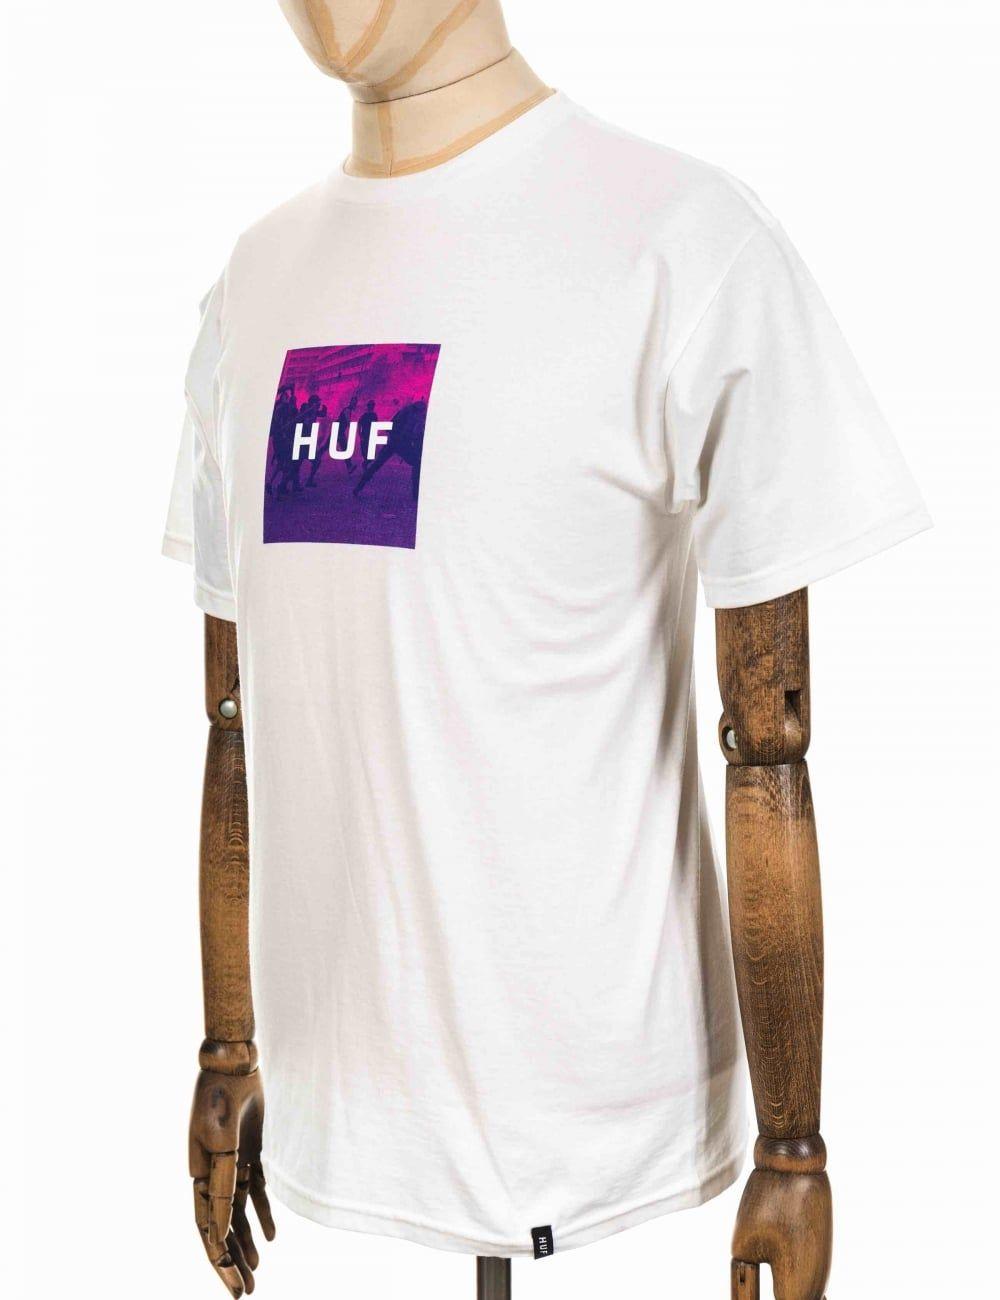 Brown and White Box Logo - Huf Riot Box Logo Tee from iConsume UK